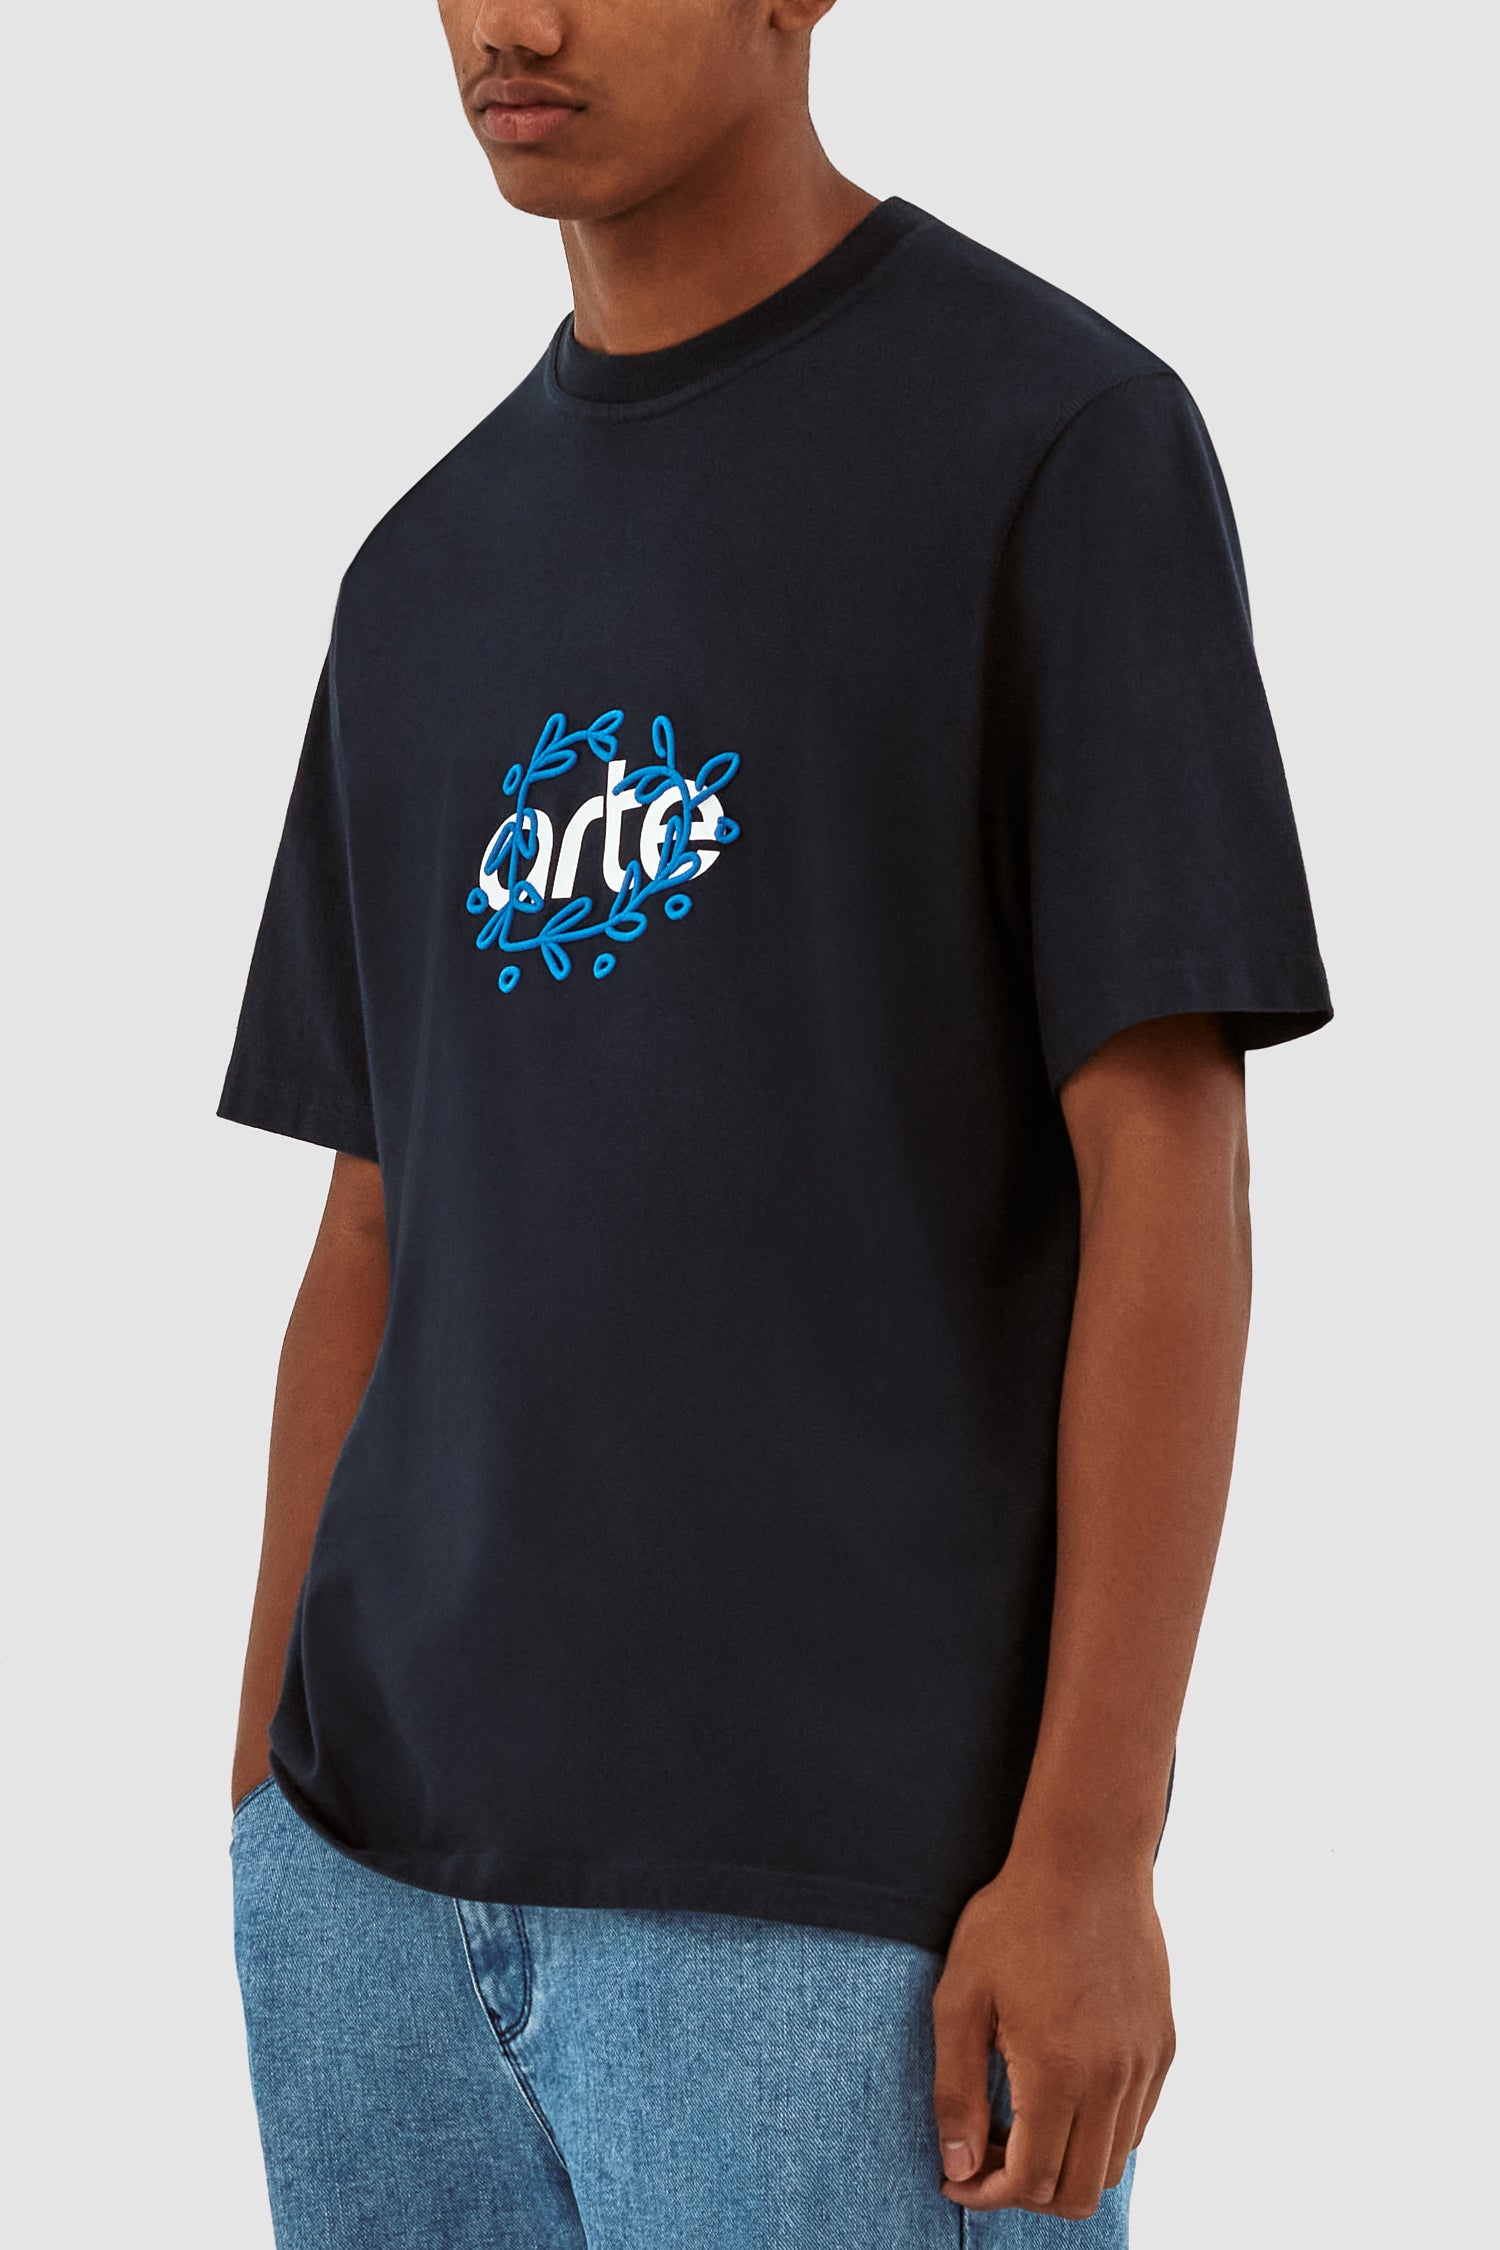 Teo Arte Front T-shirt - Navy